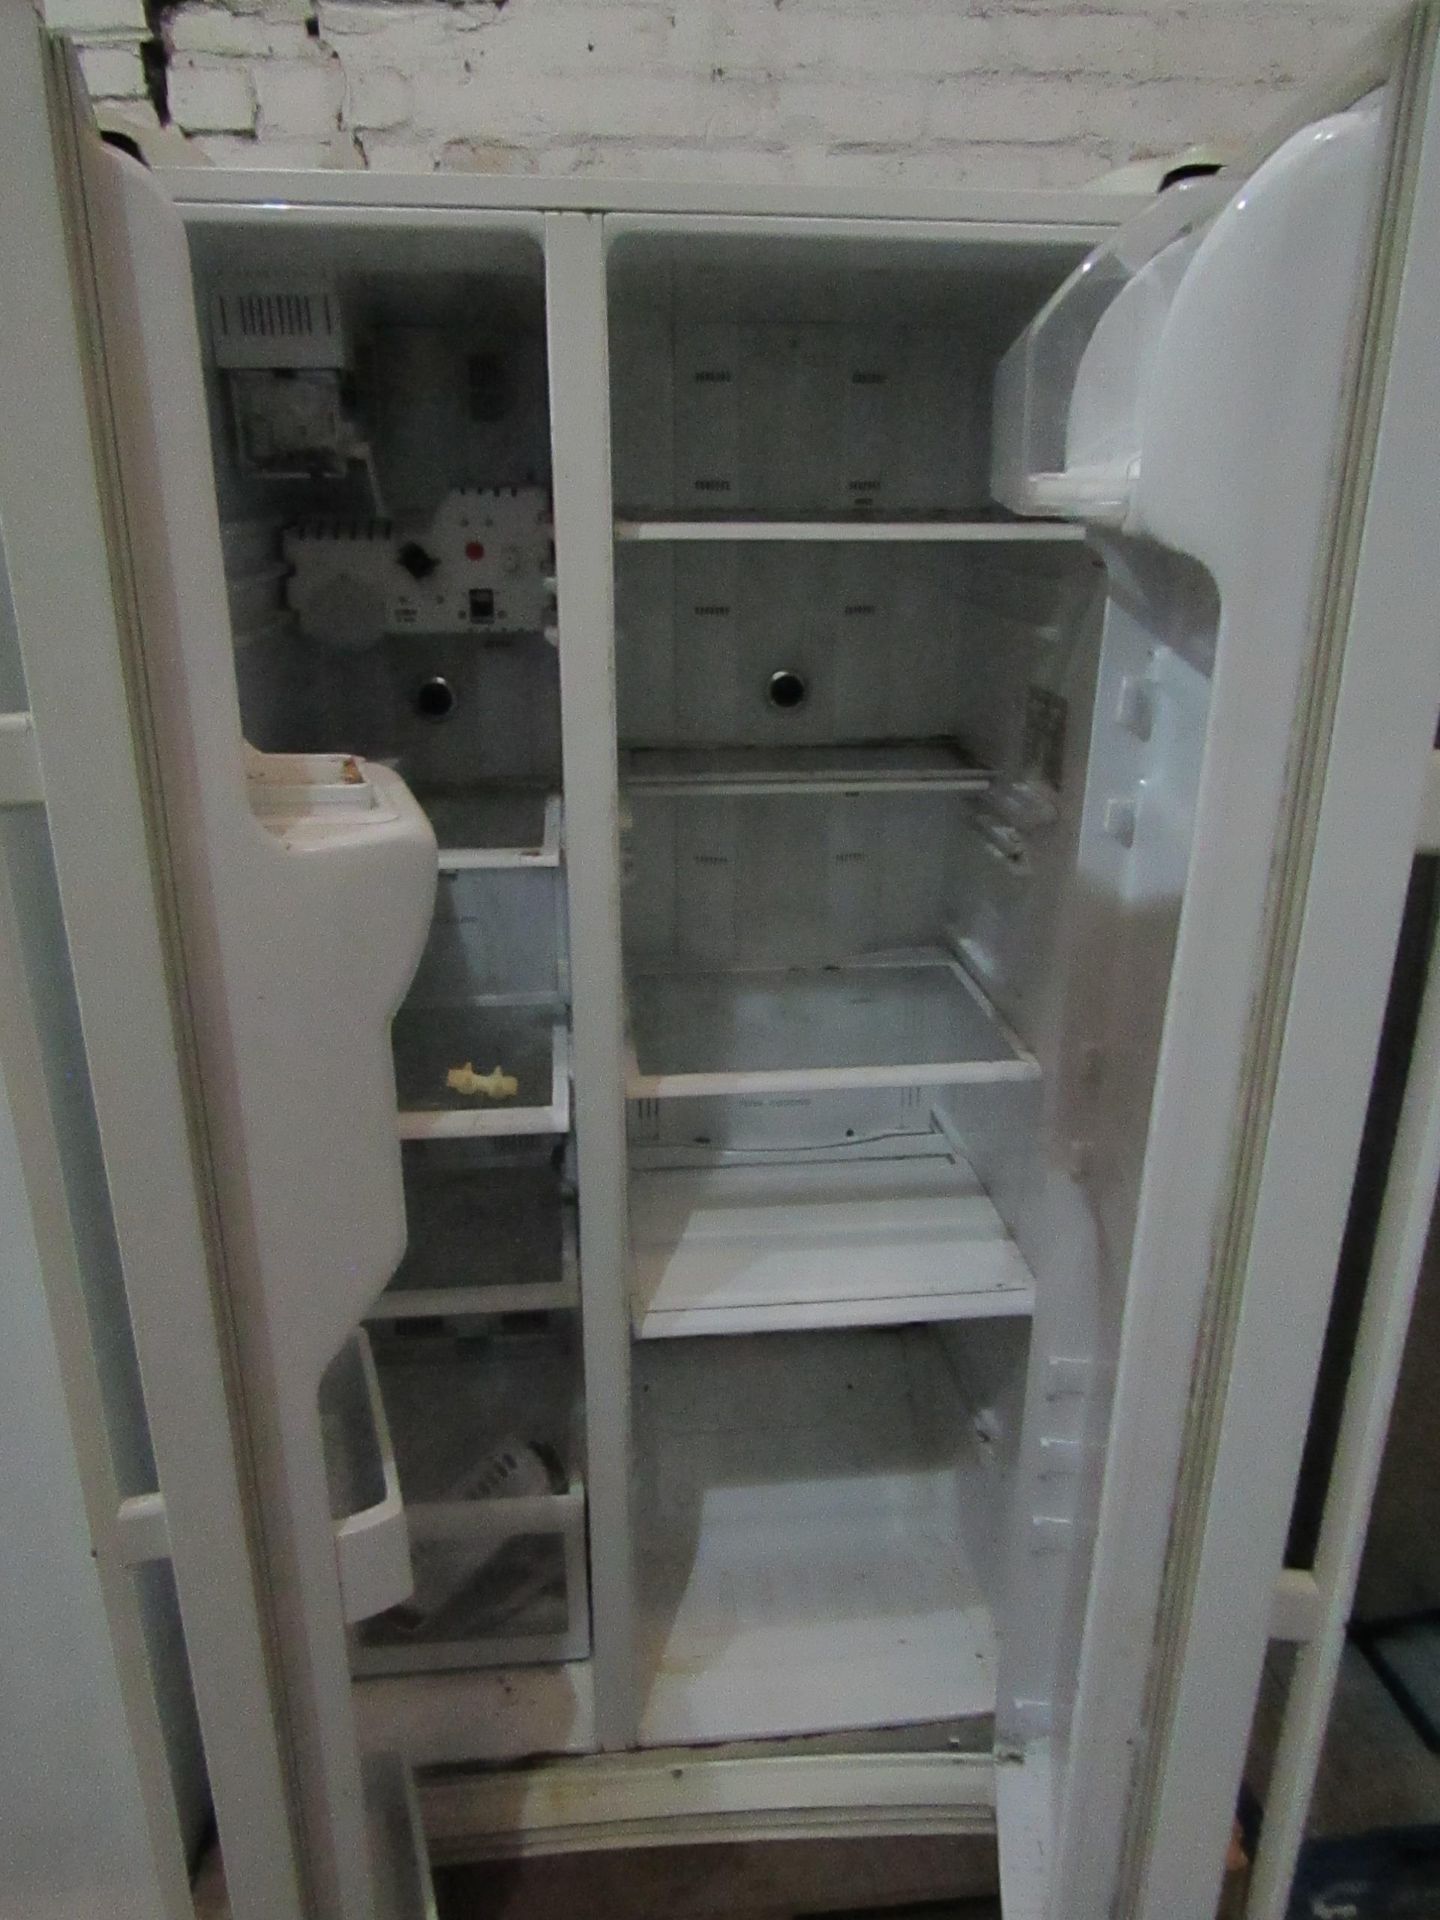 Samsung American fridge freezer, no power and used - Image 2 of 2